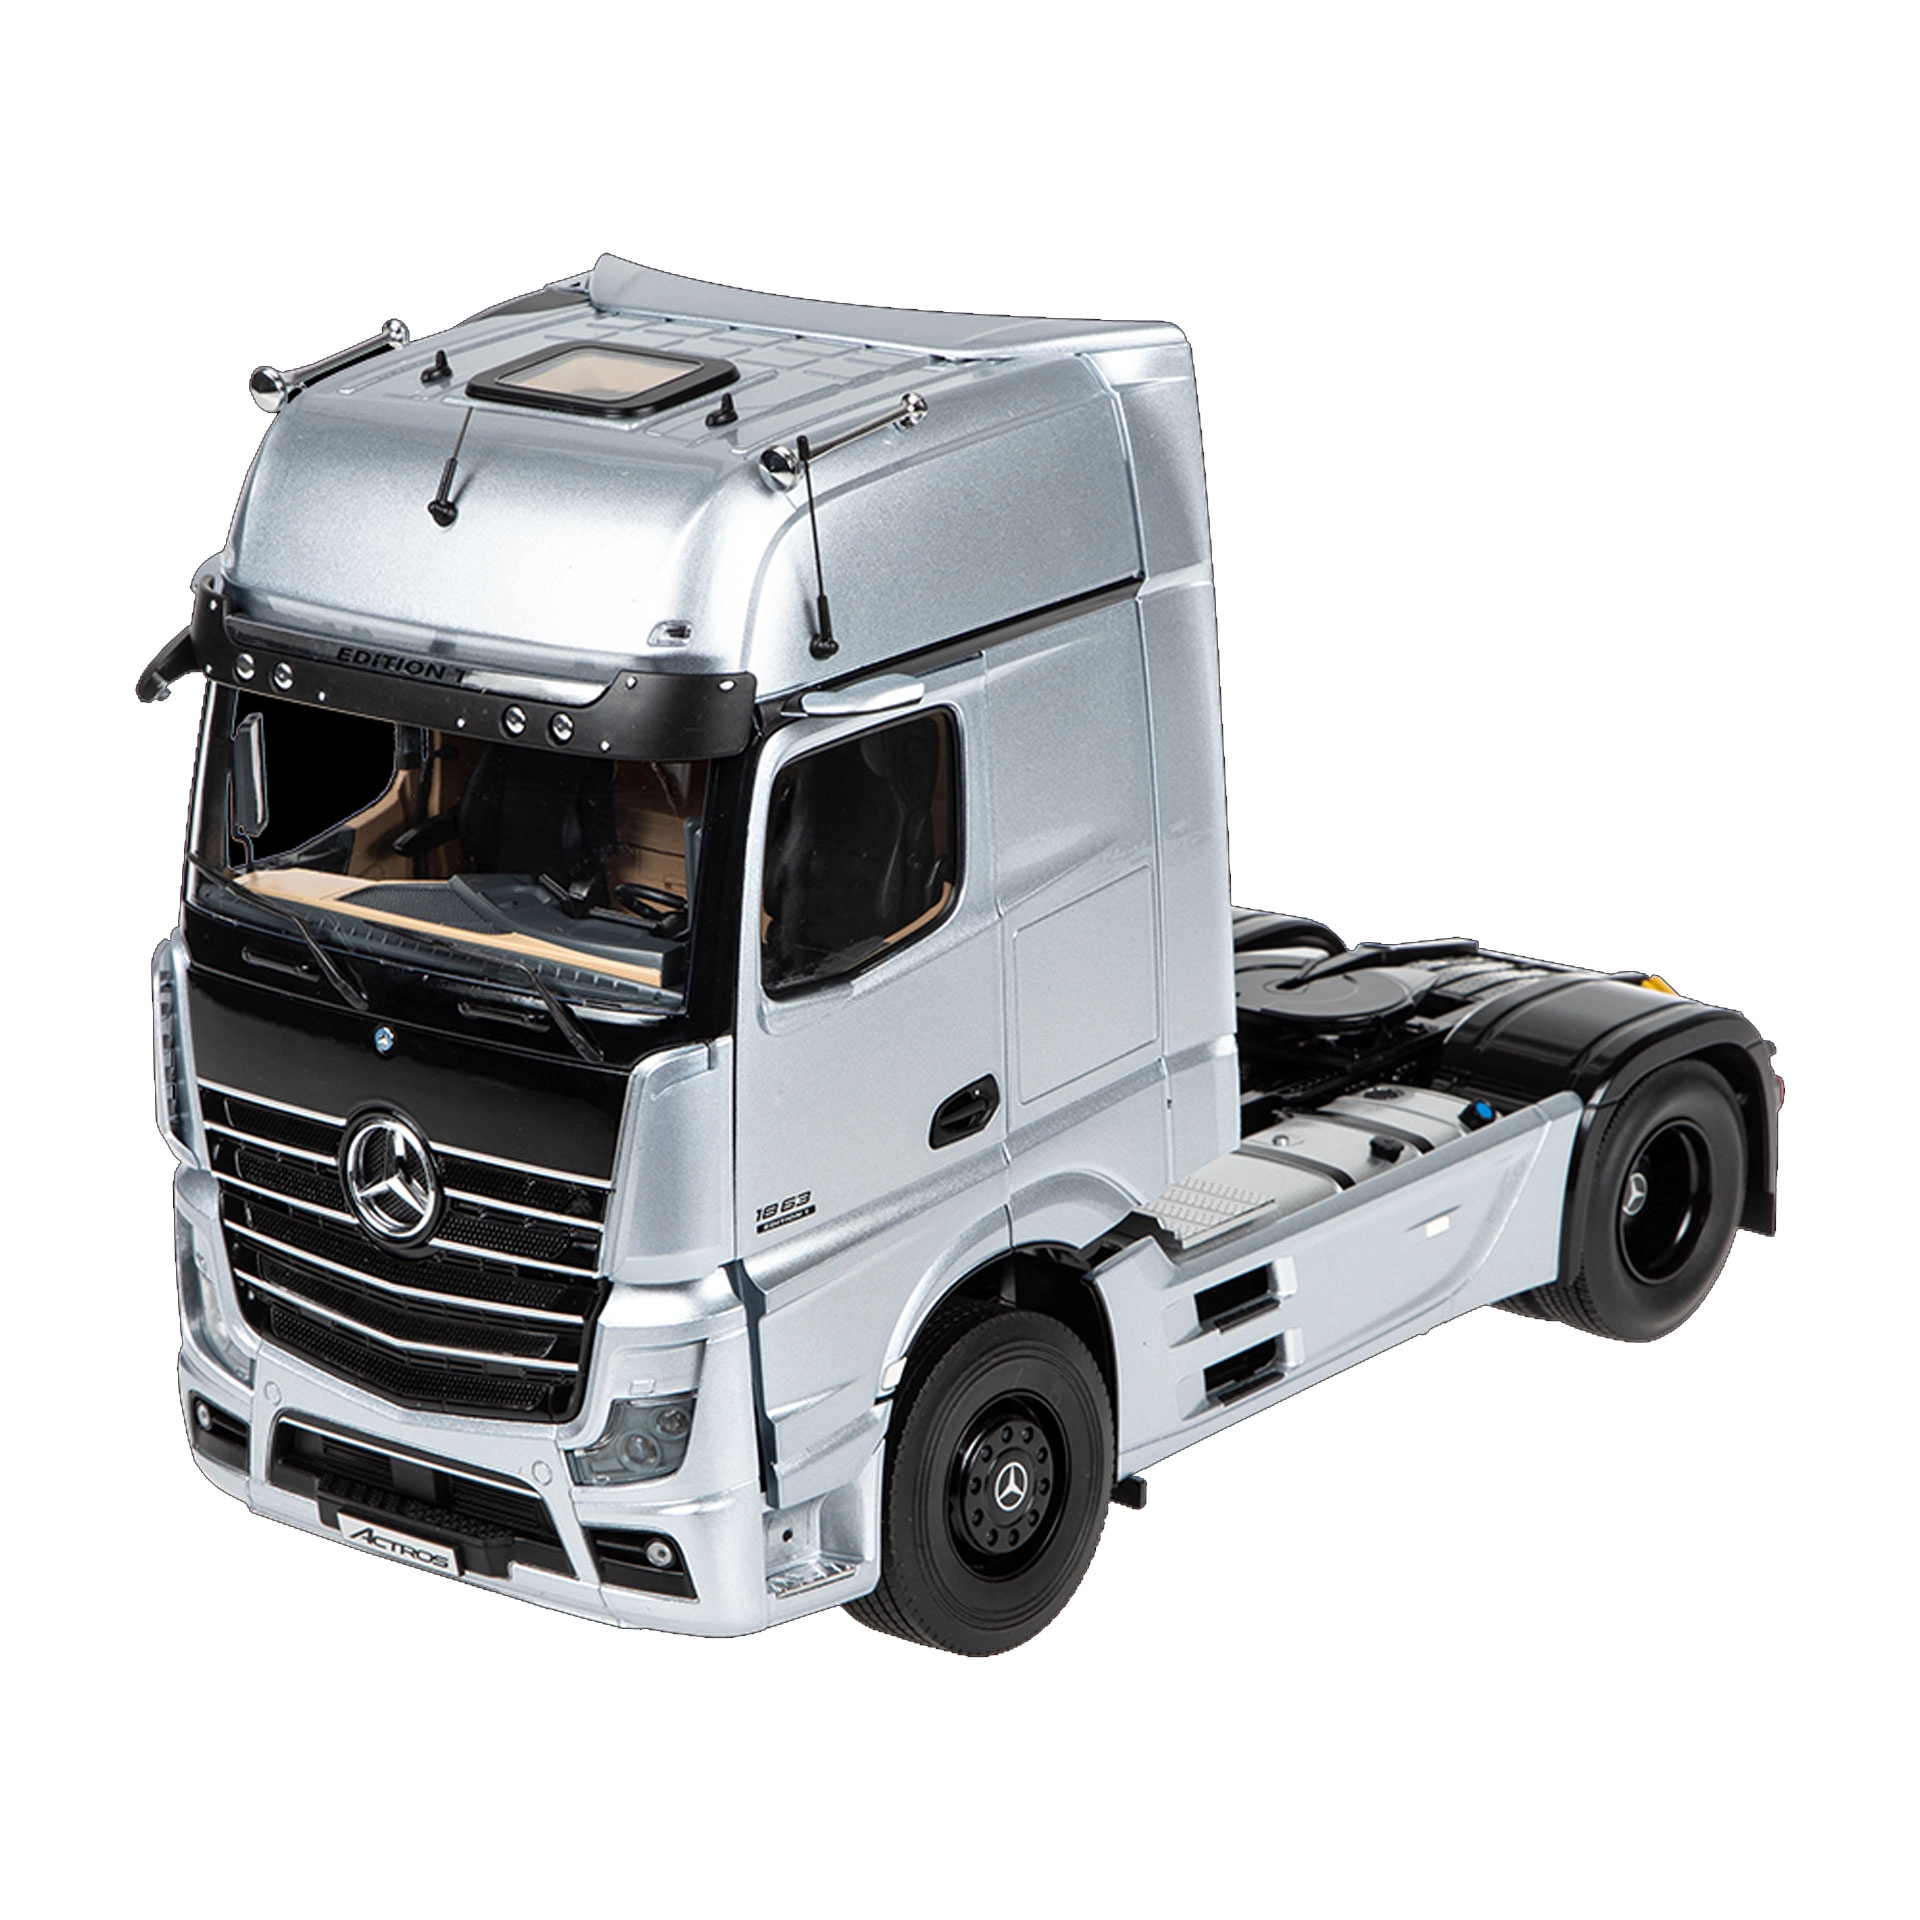 V66004211_mercedes-benz_trucks_modellauto_actros_autotransport_rosier-onlineshop